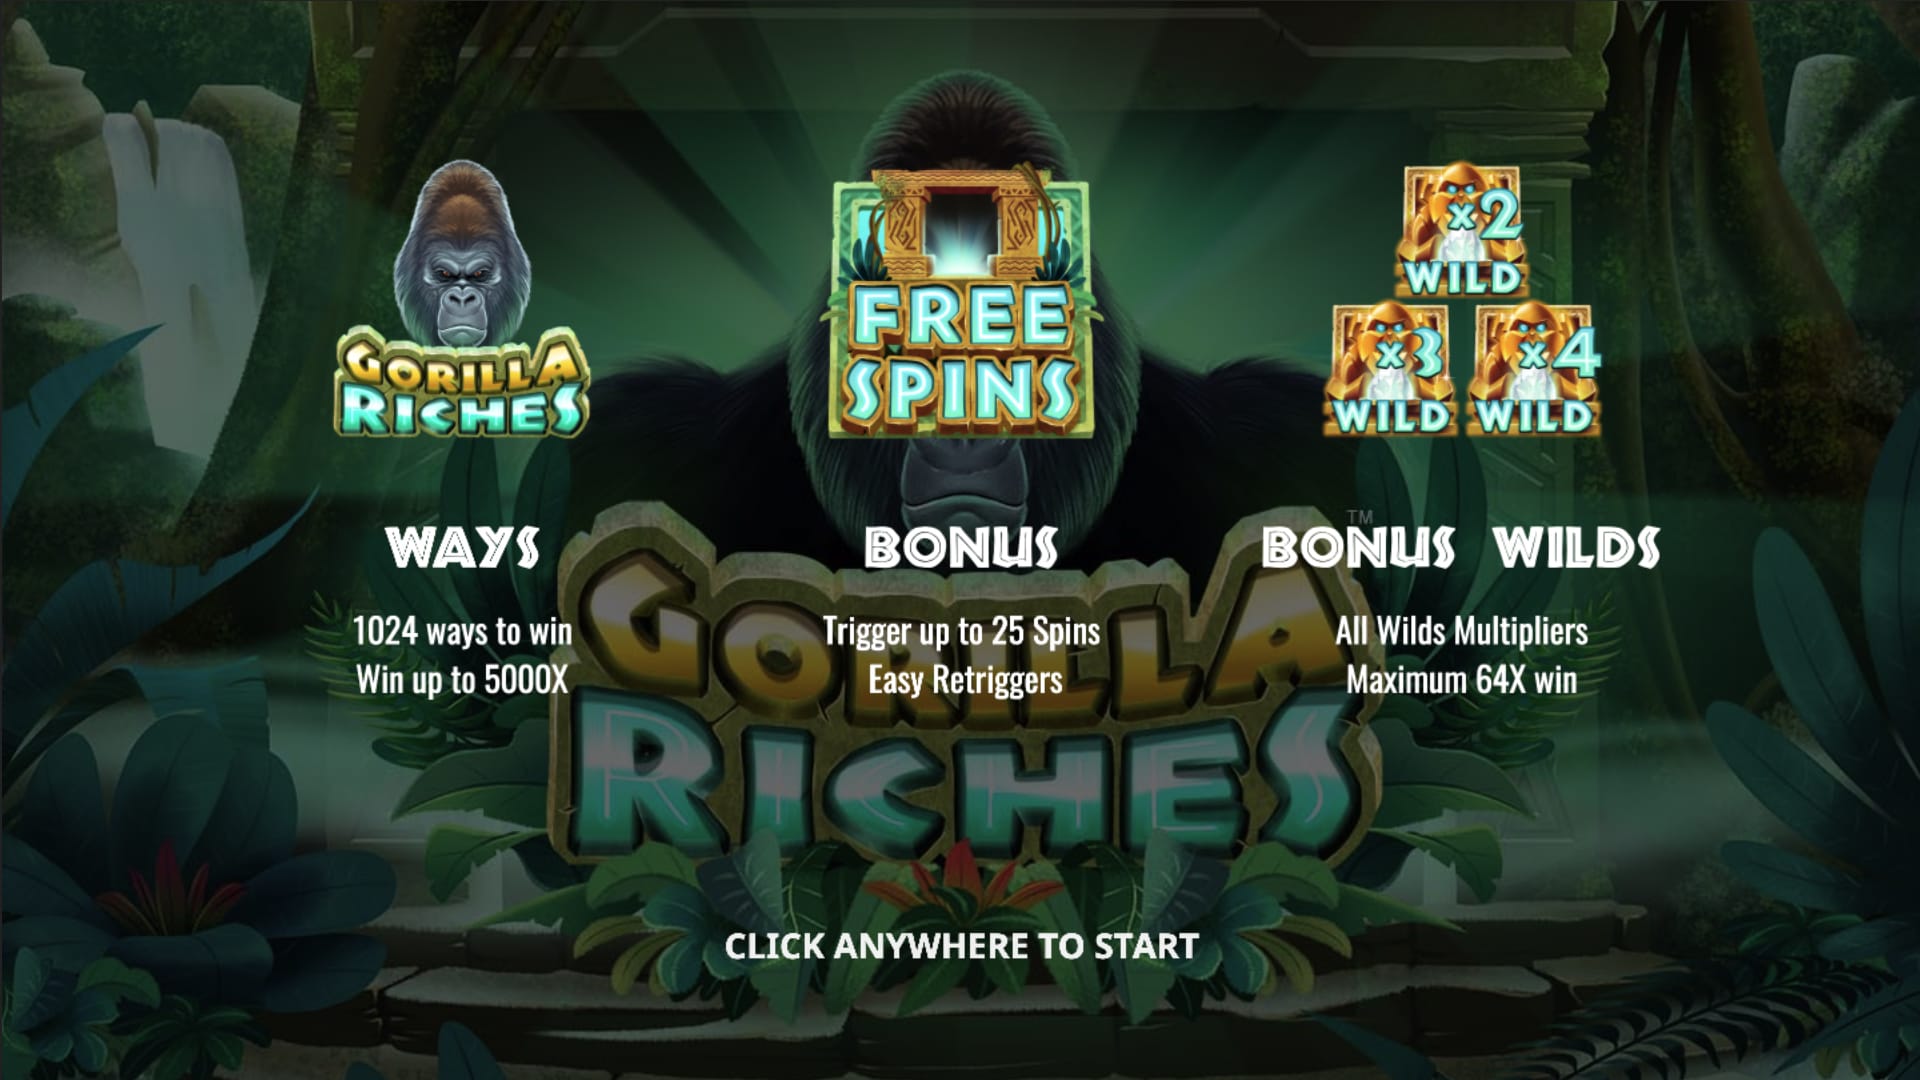 Gorilla Riches slot features